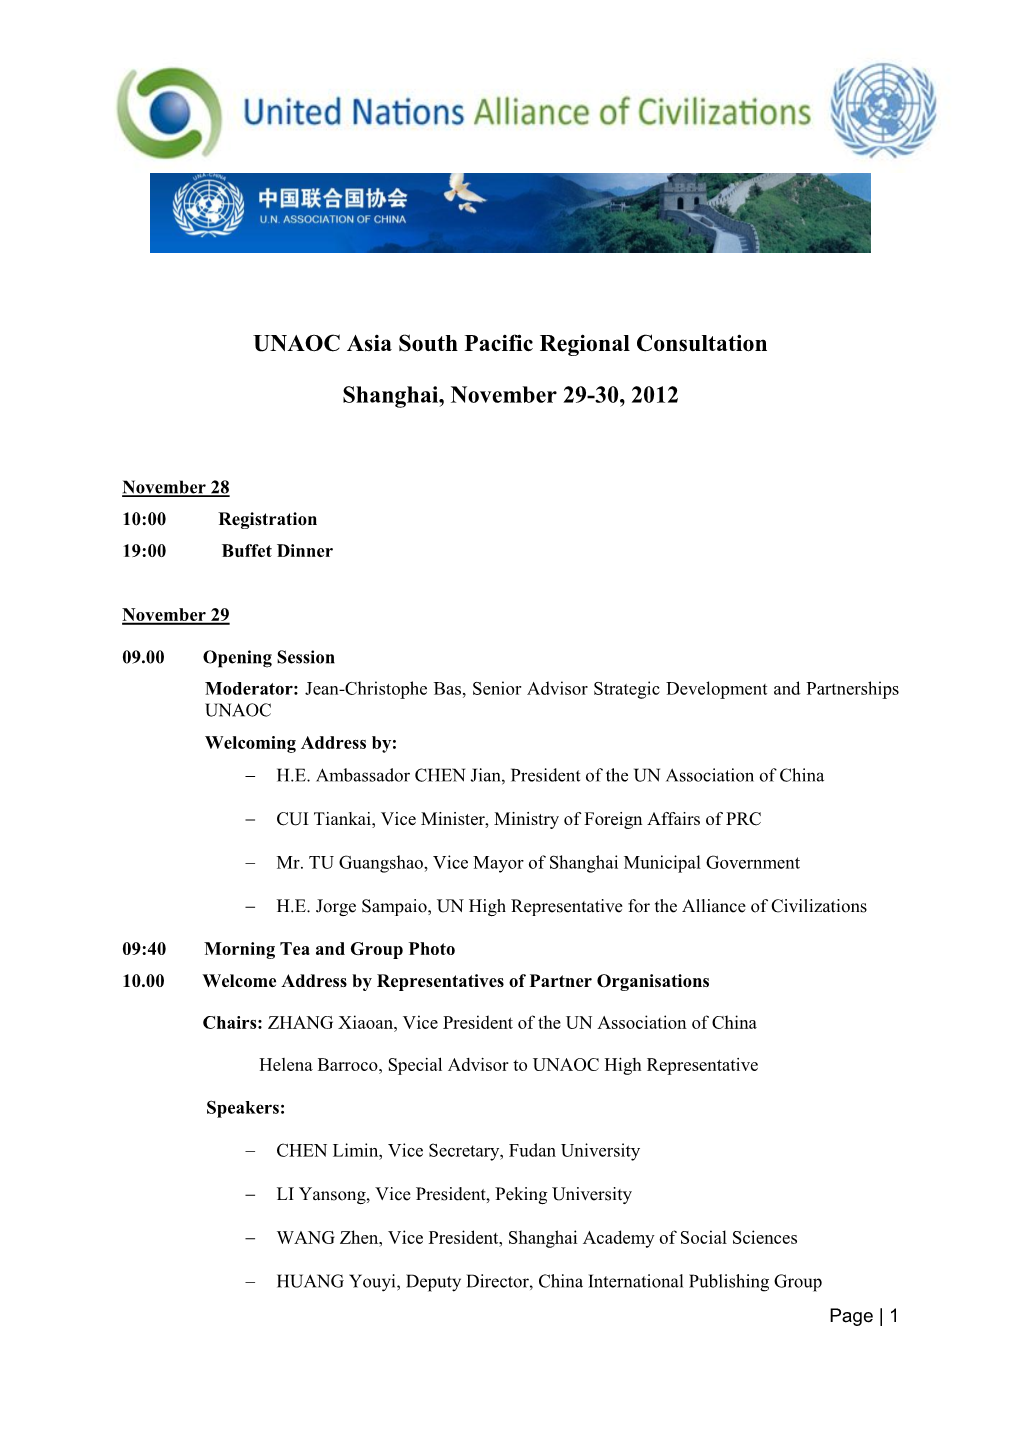 UNAOC Asia South Pacific Regional Consultation Shanghai, November